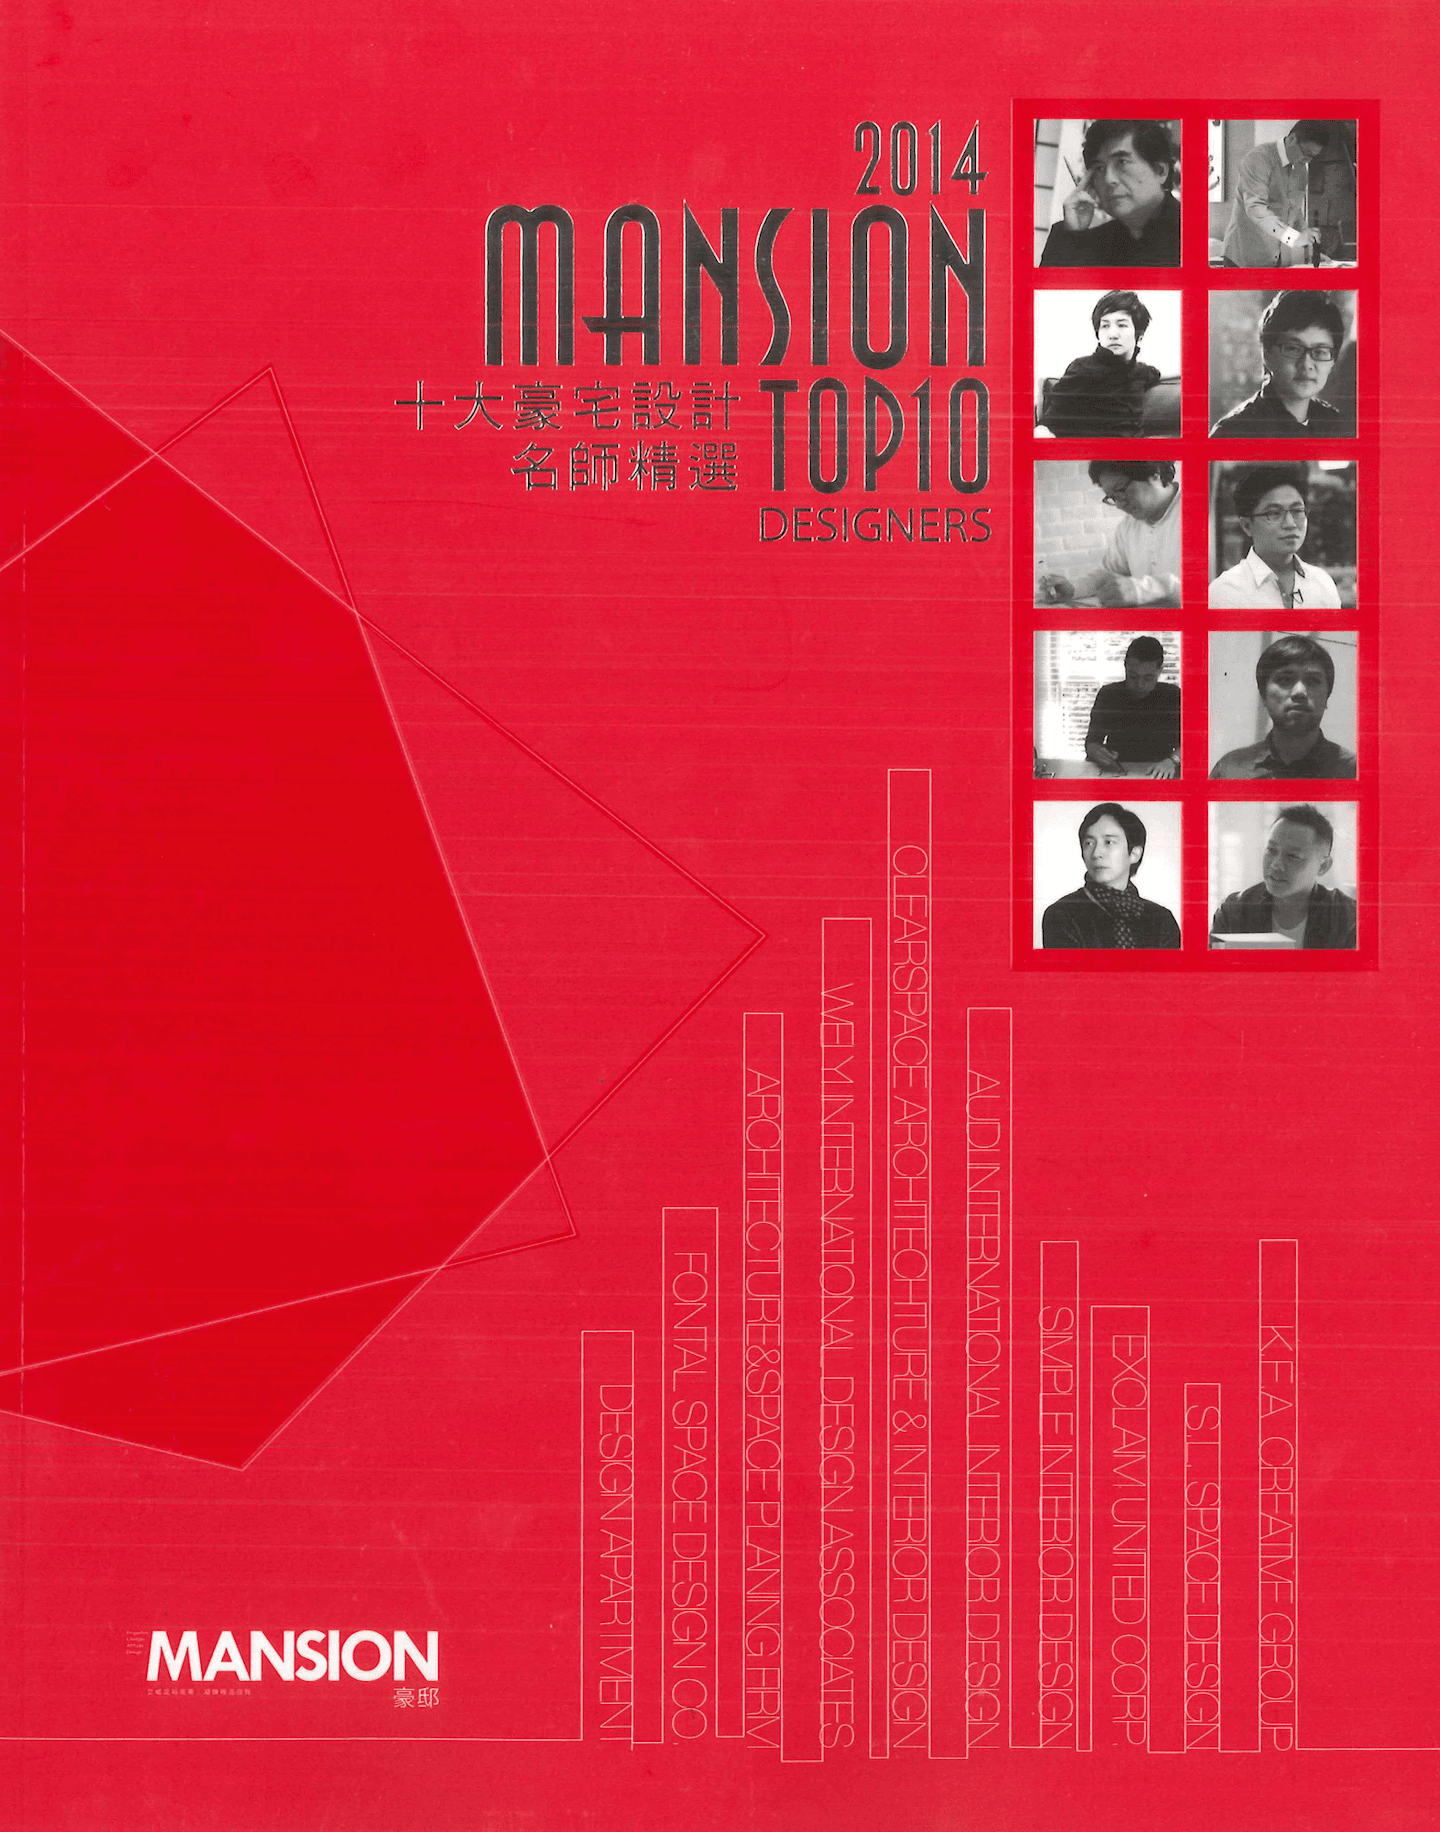 MANSION TOP10 DESIGNERS